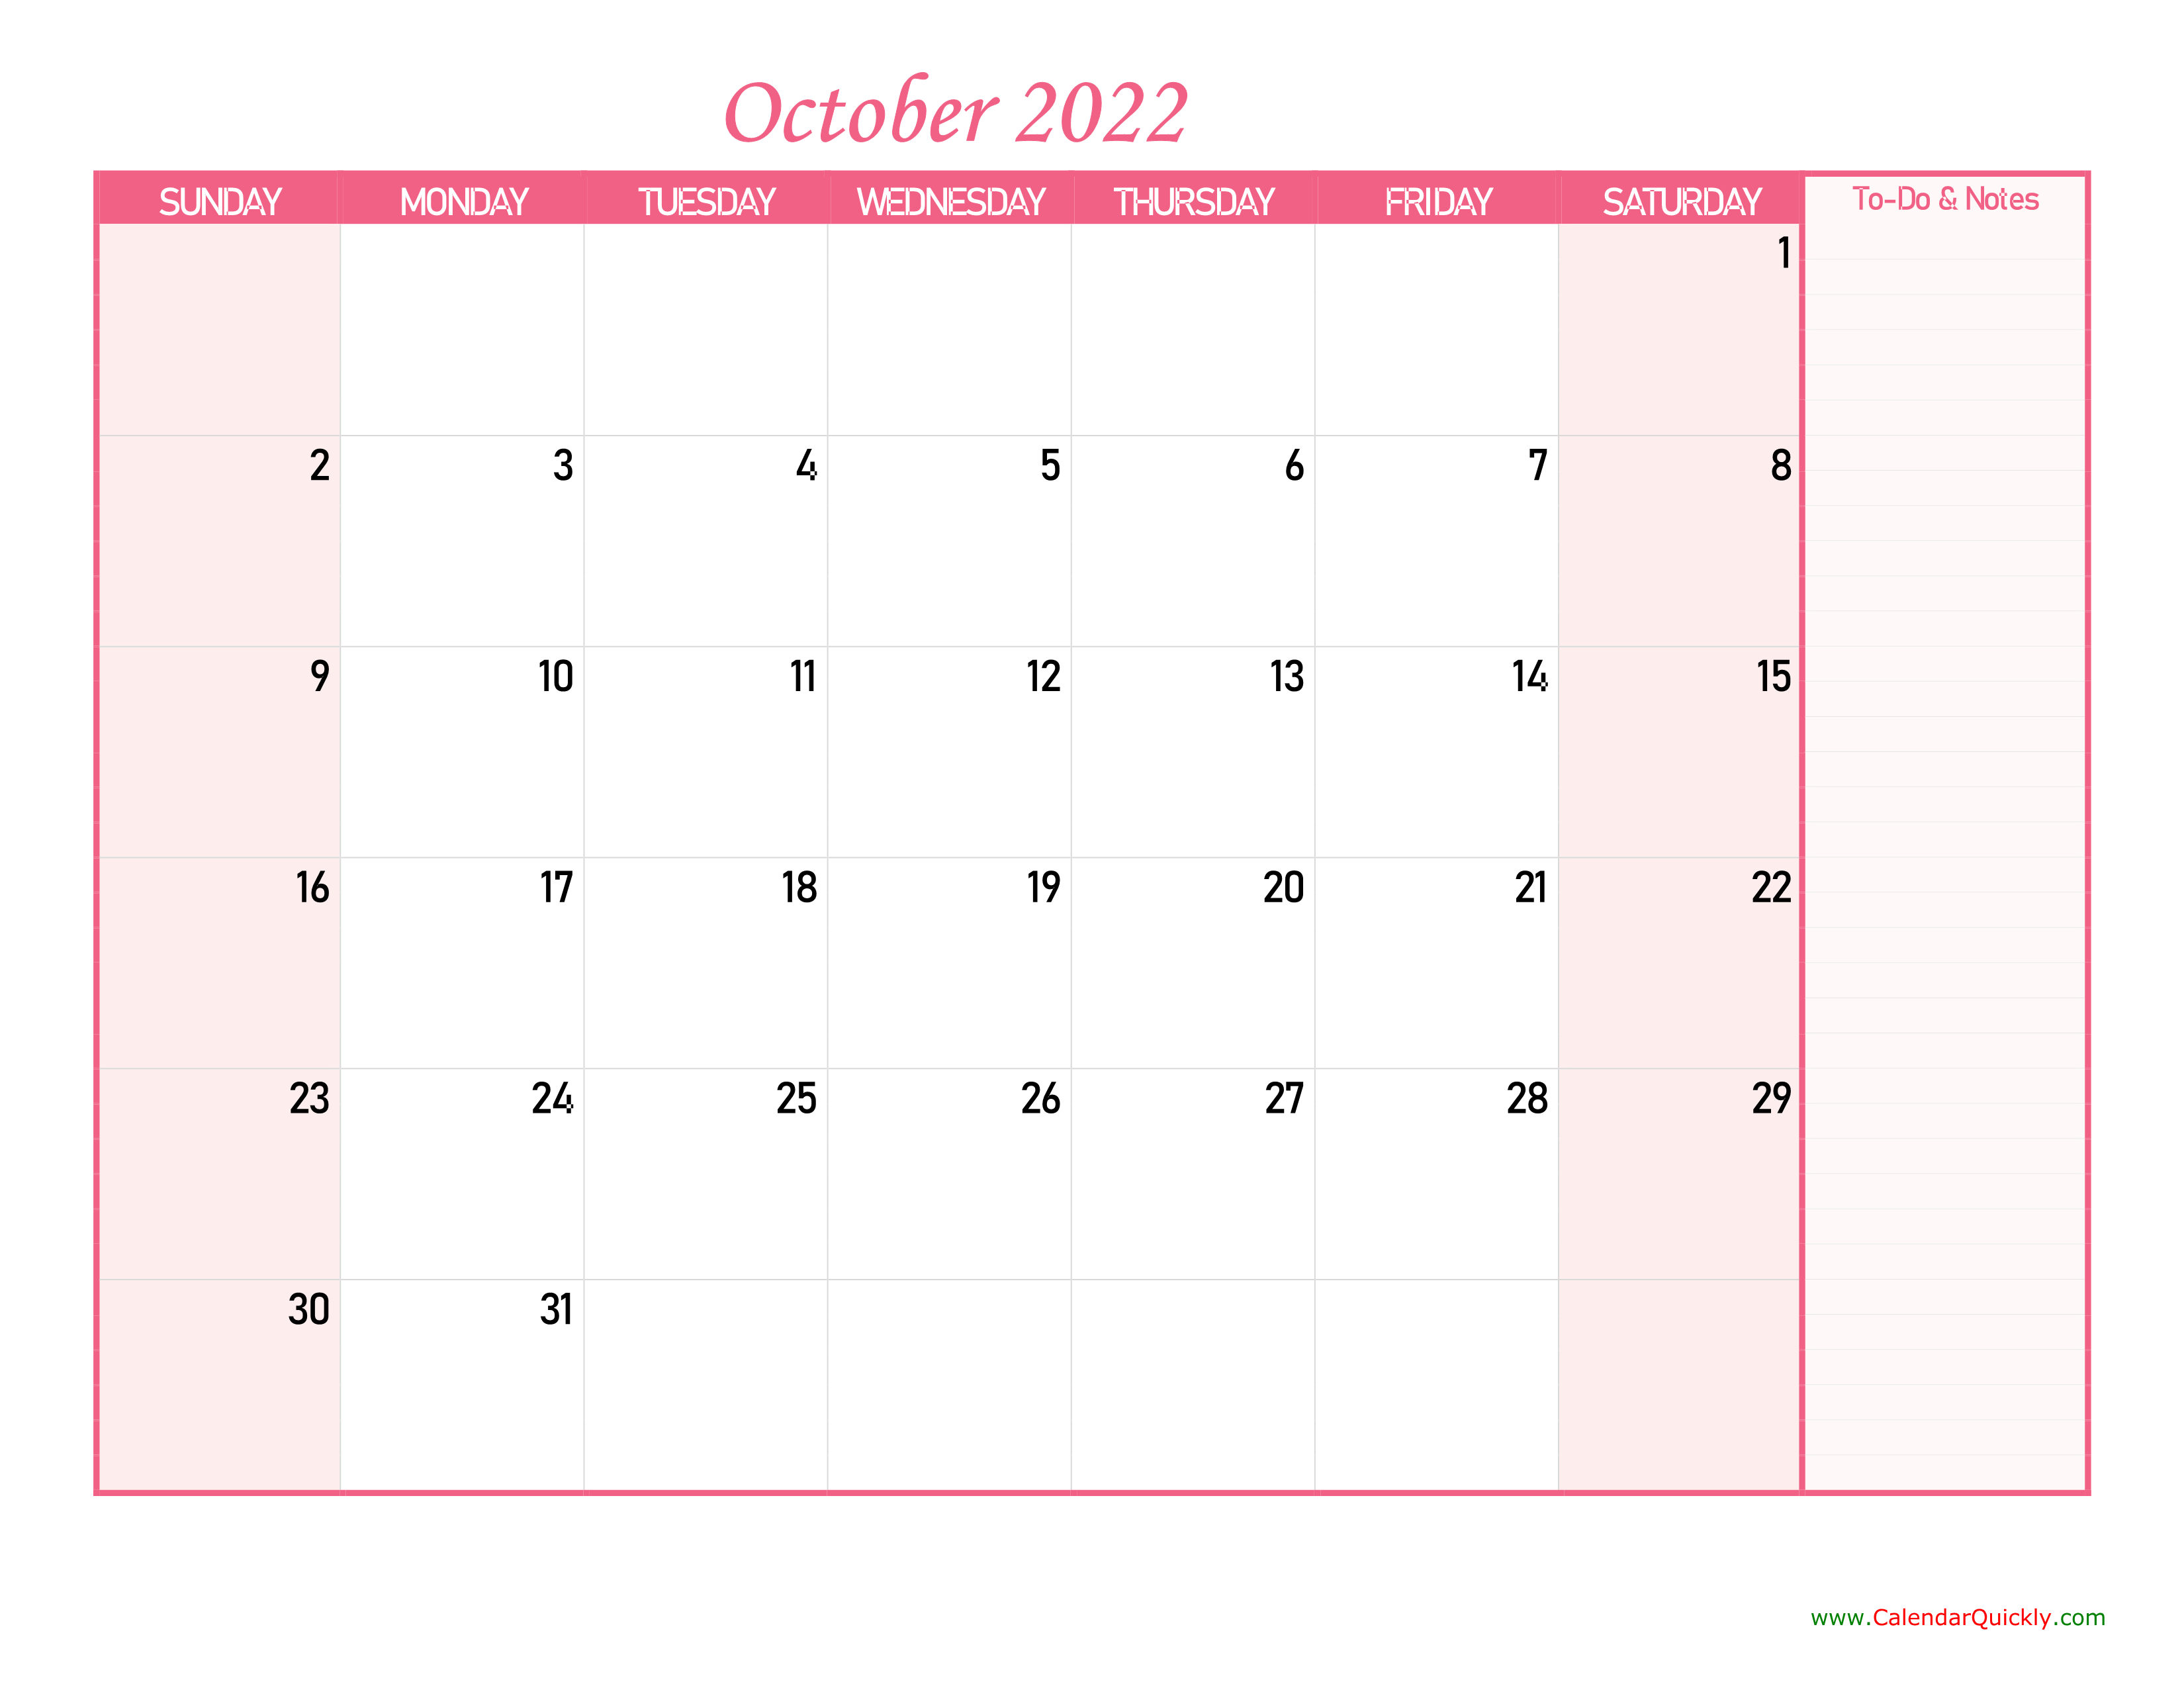 fsu-uconn-spring-calendar-month-calendar-2022-daily-desk-calendar-customized-calendar-2022